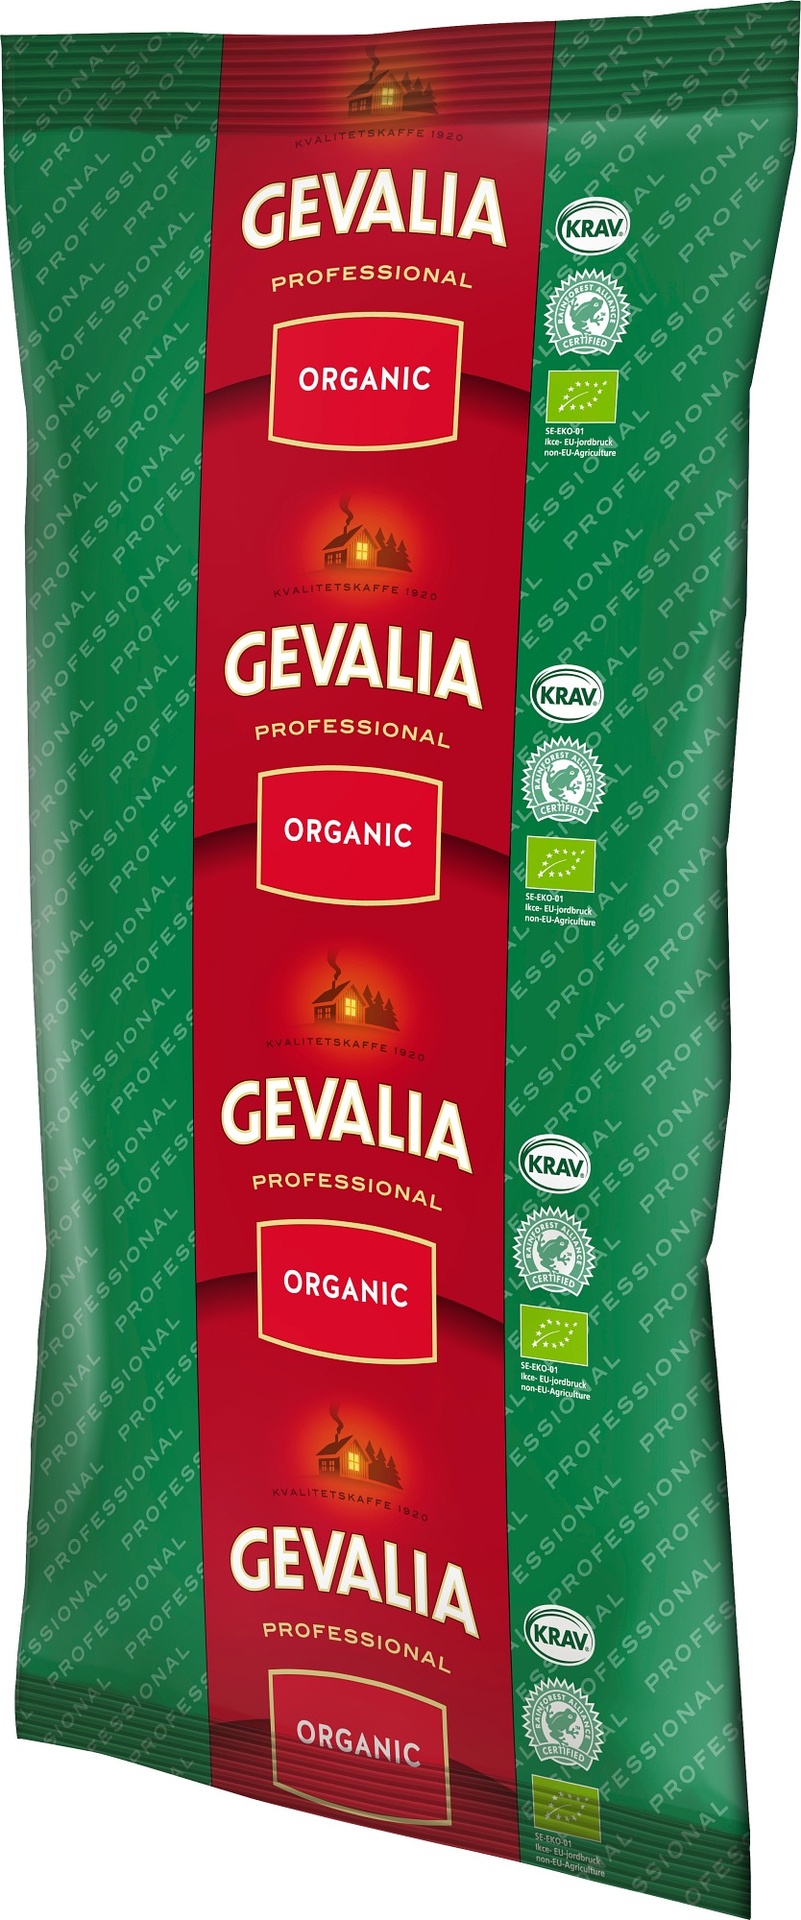 [8563623] Kaffe Gevalia Organic Krav 1kg